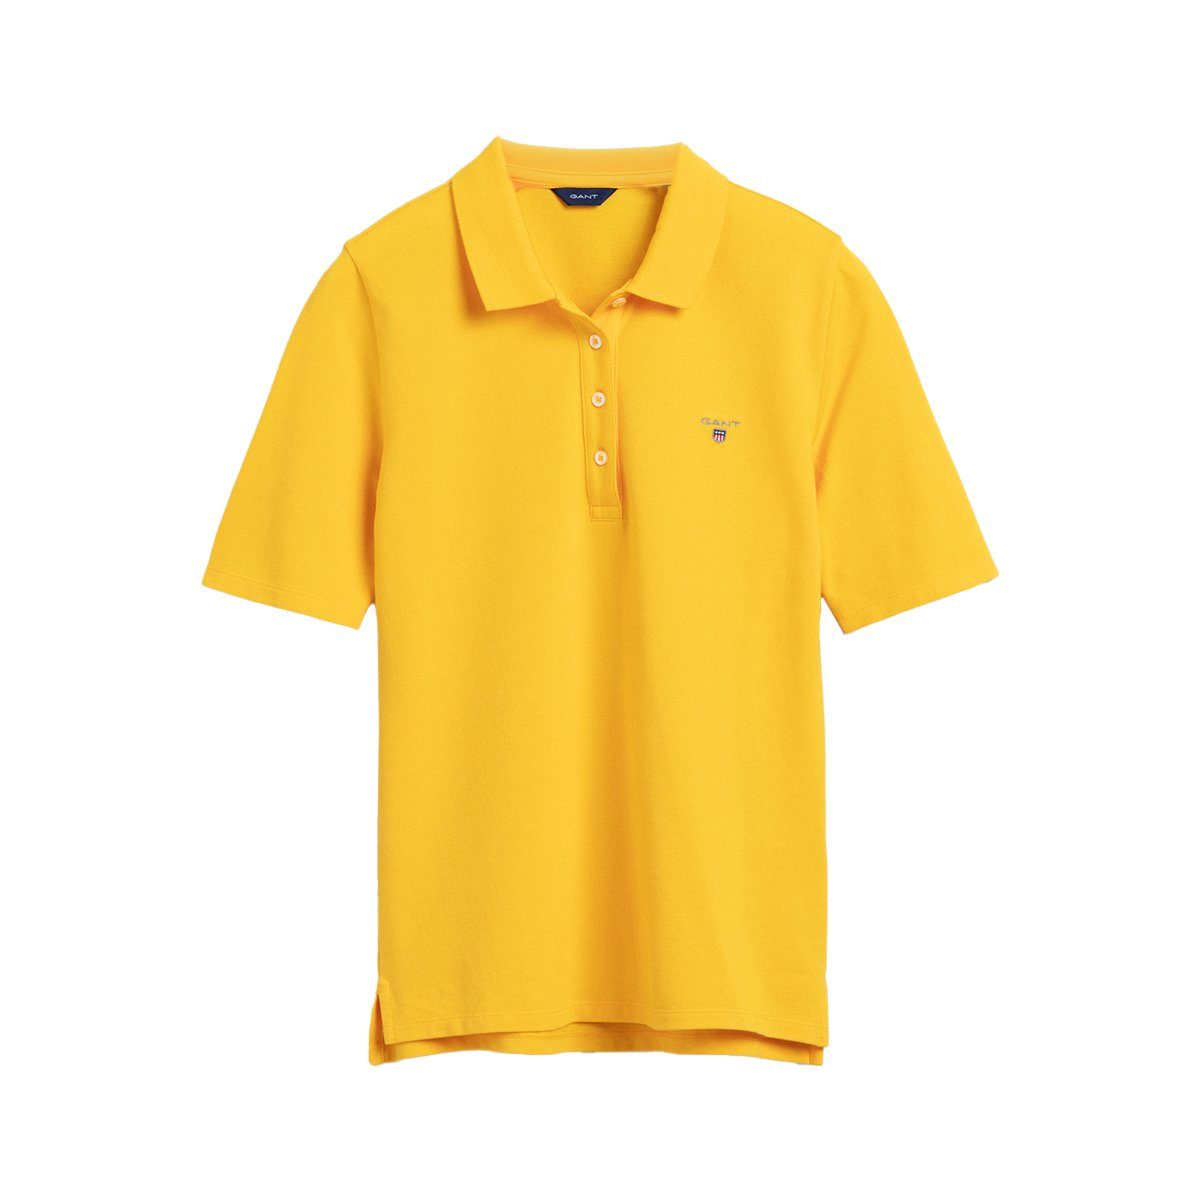 Gant Poloshirt 402210 Damen Gelb(728 The Baumwolle Poloshirt Solar Gelb) Unifarben Original aus Pique